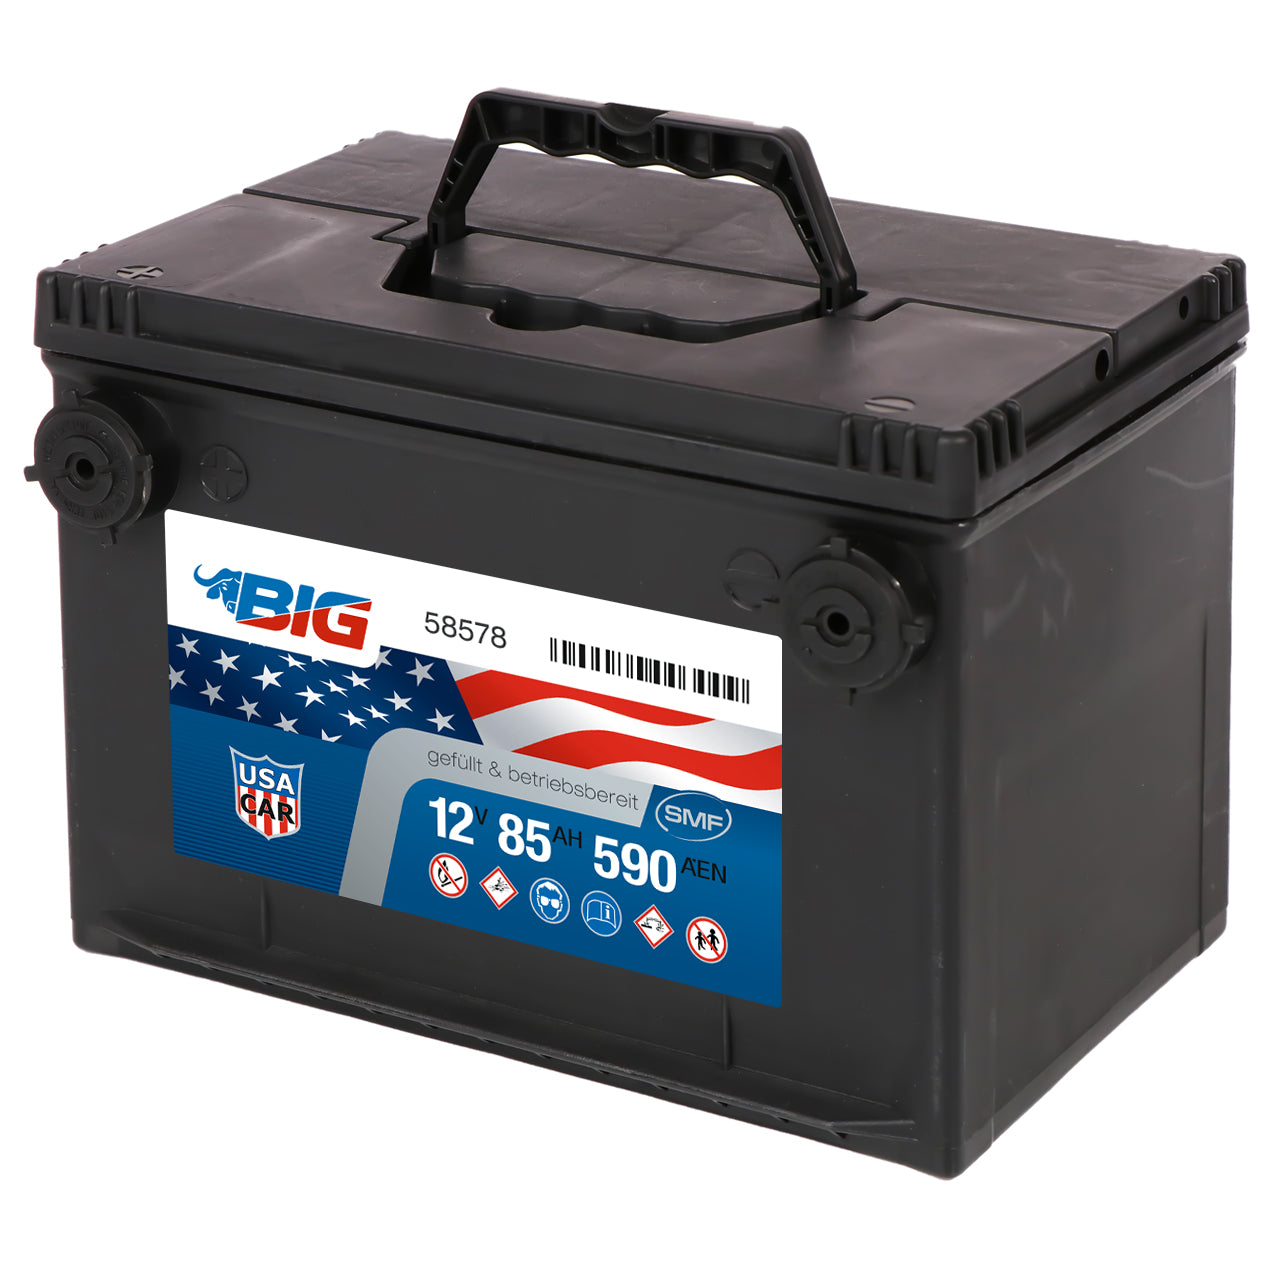 US Autobatterie 75Ah 12V USA CAR US Batterie : : Auto & Motorrad